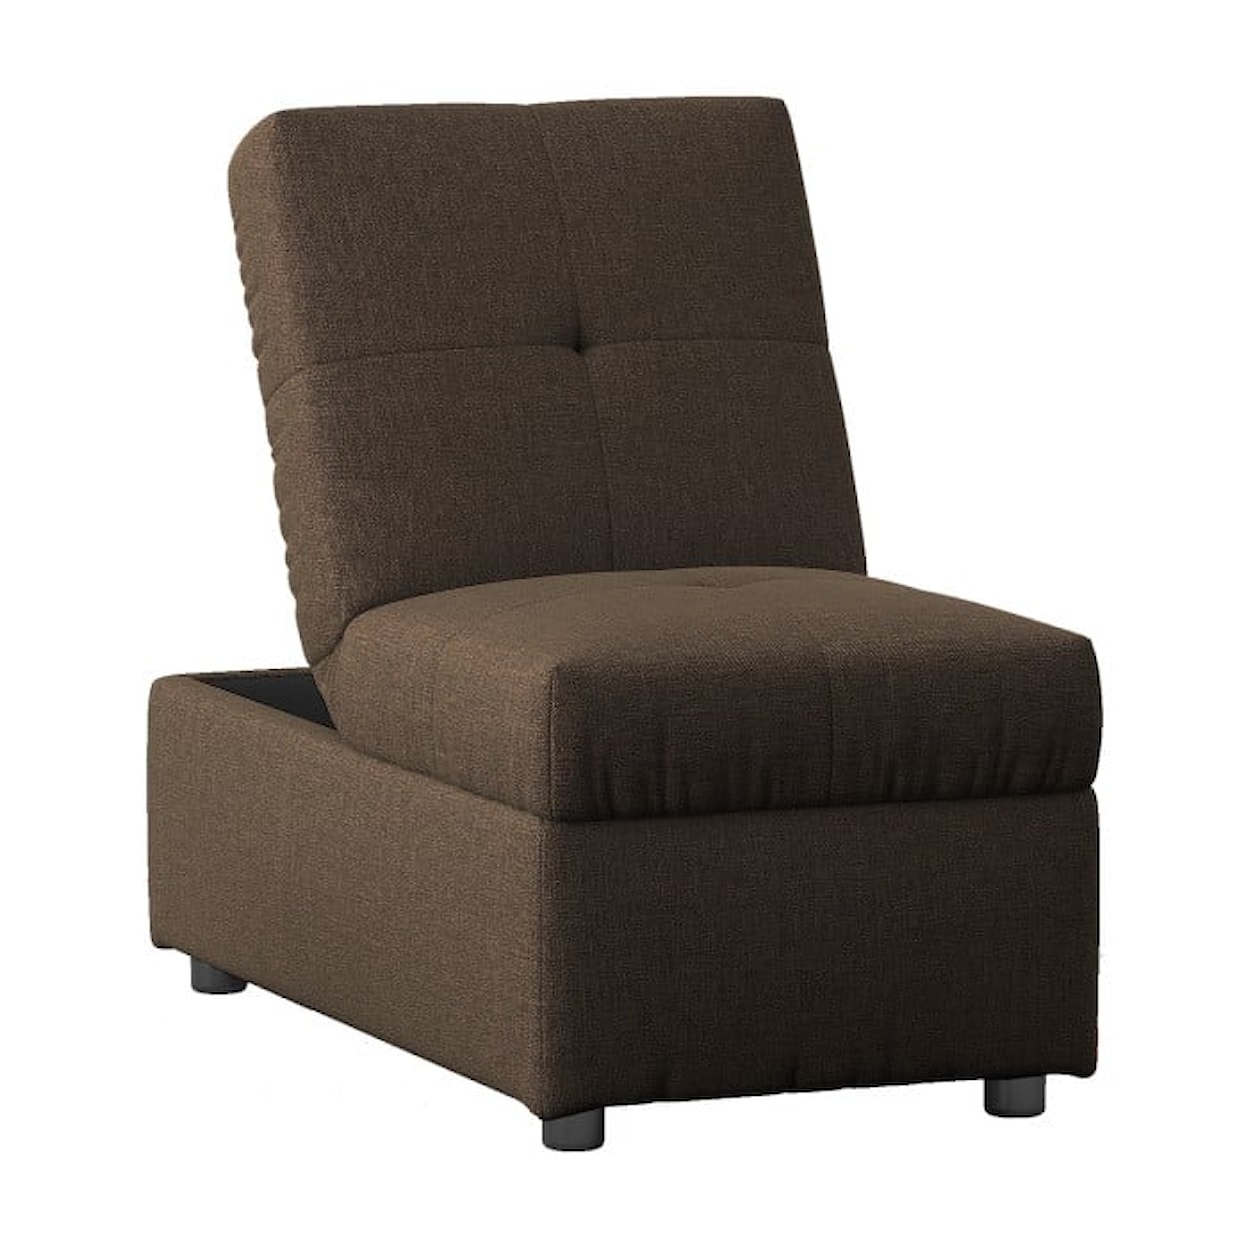 Homelegance Denby Storage Ottoman/Chair